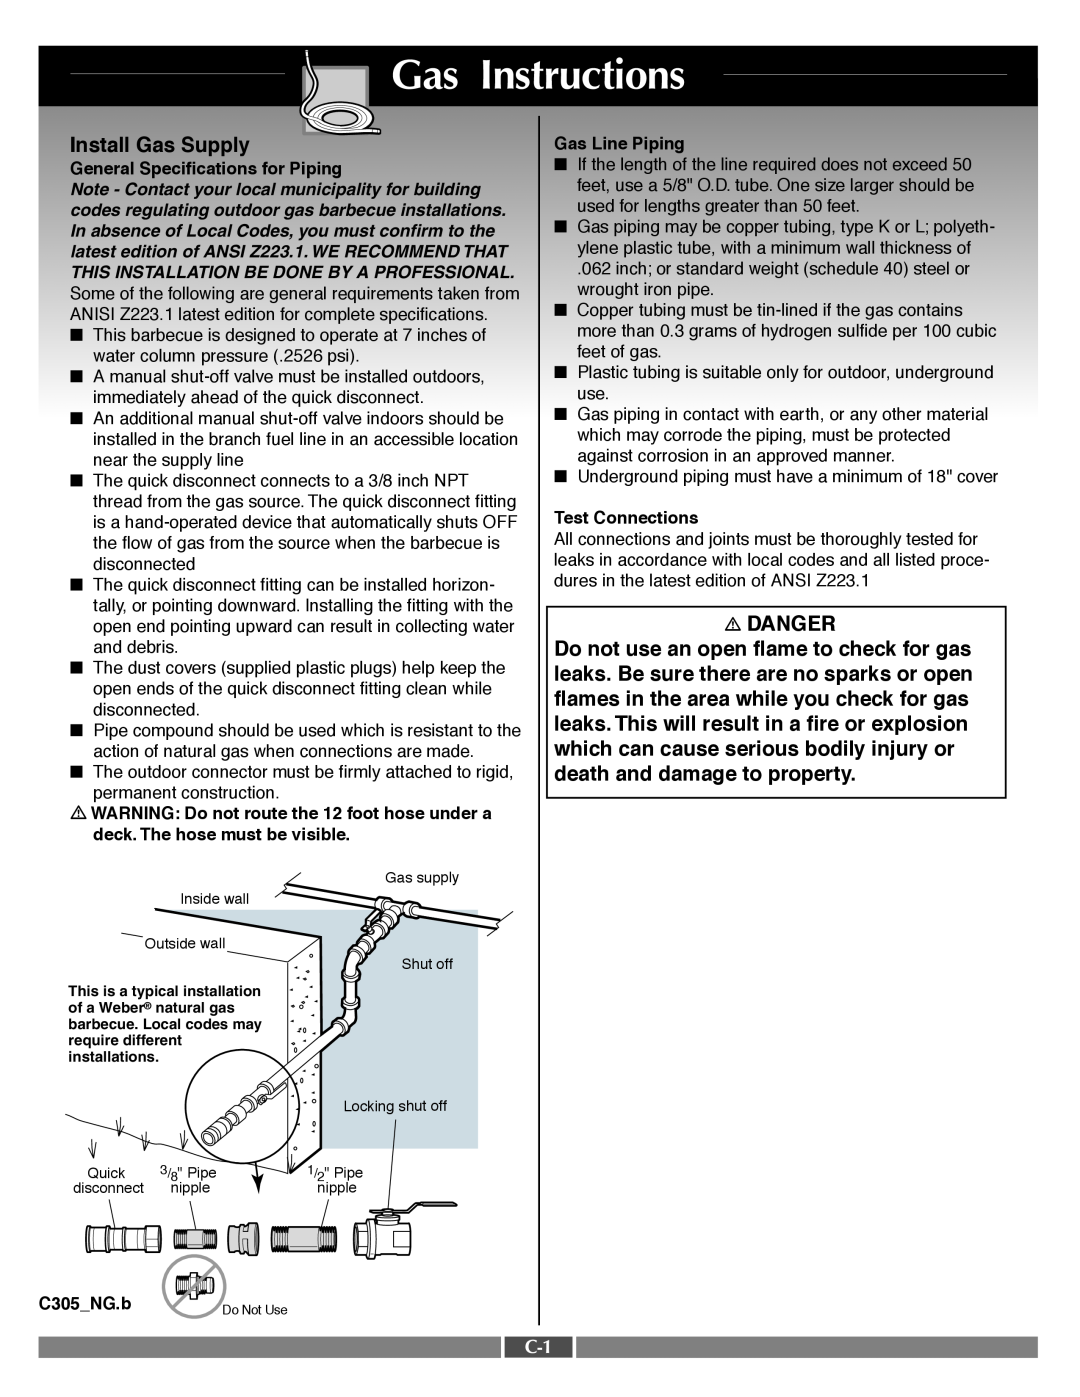 Weber 55556 manual Gas Instructions, Install Gas Supply, Danger 